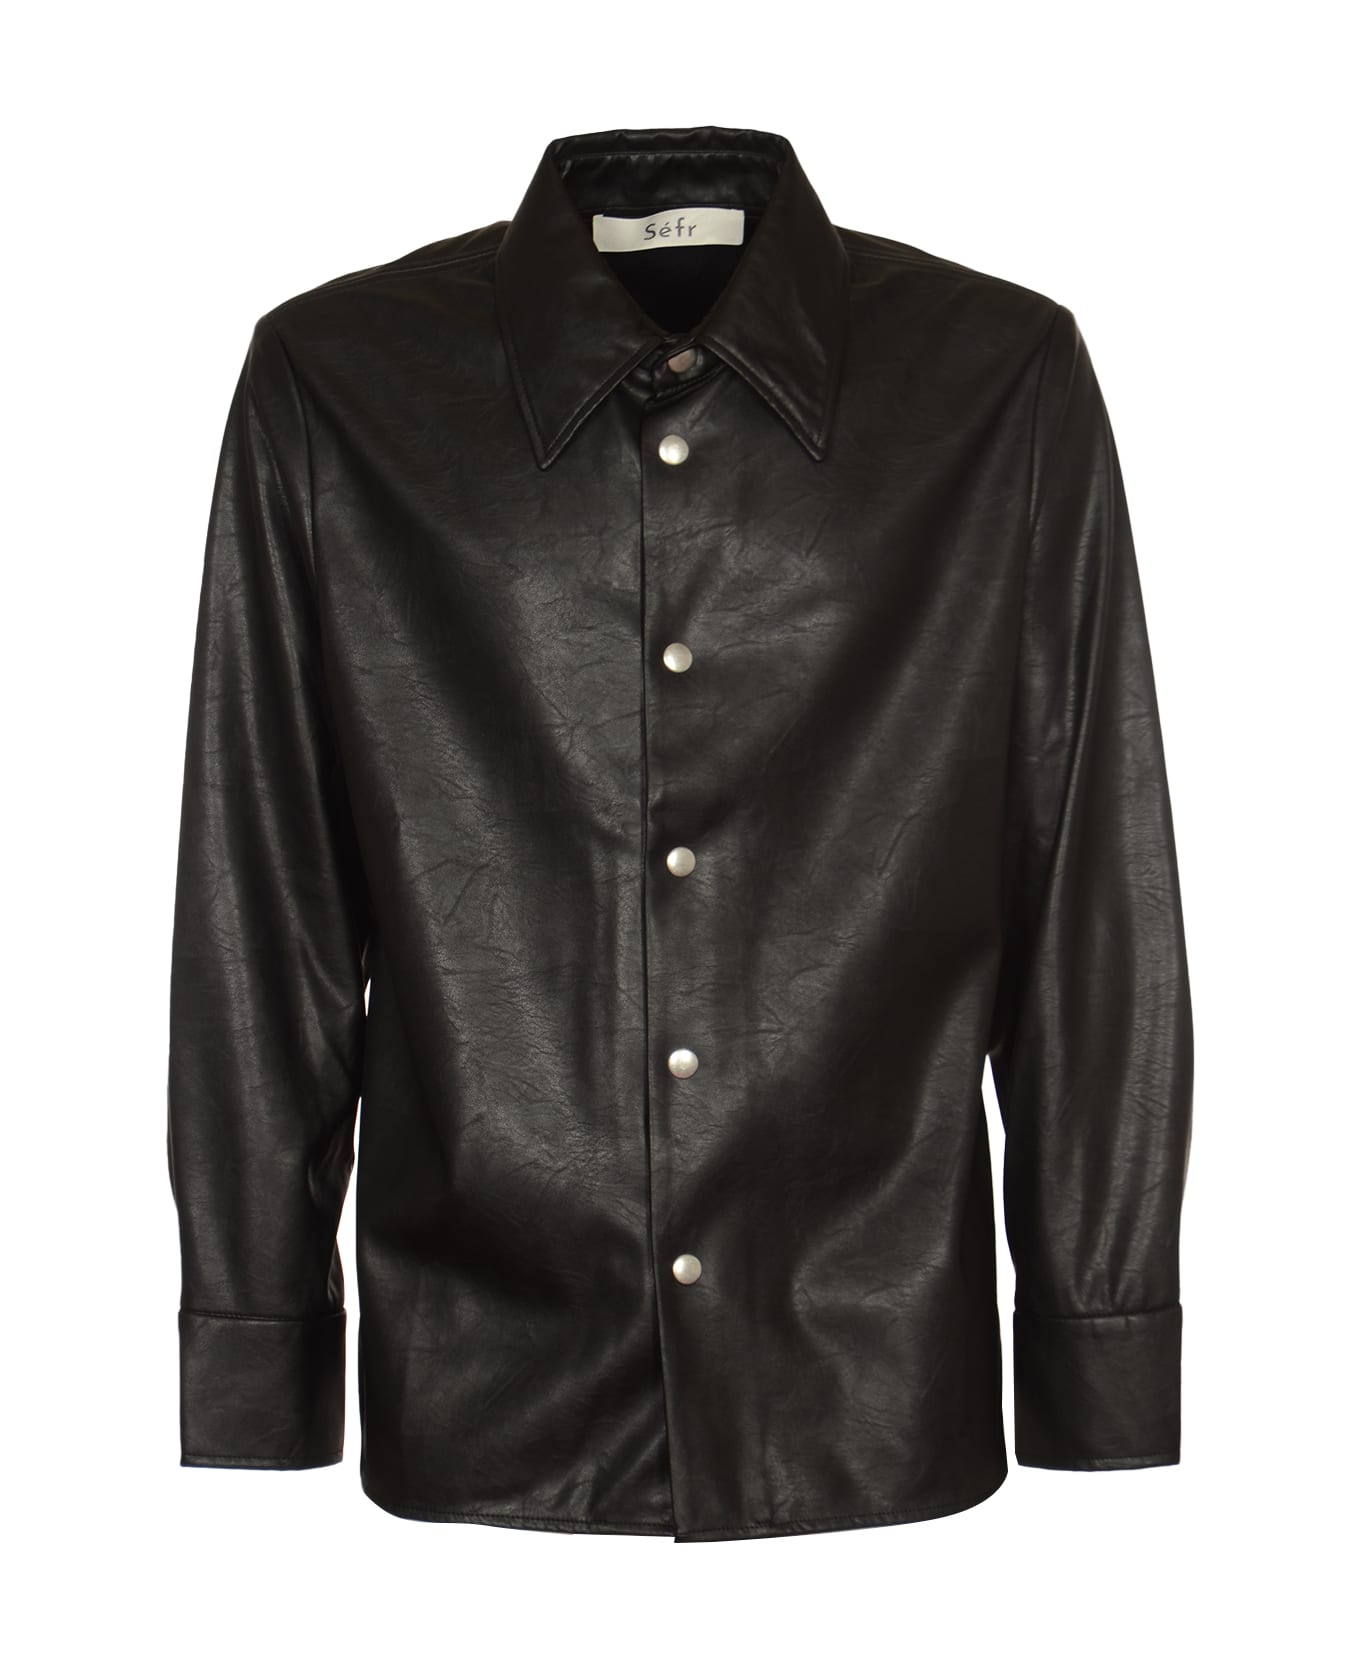 Séfr Rainier Oversized Shirt - Space Black